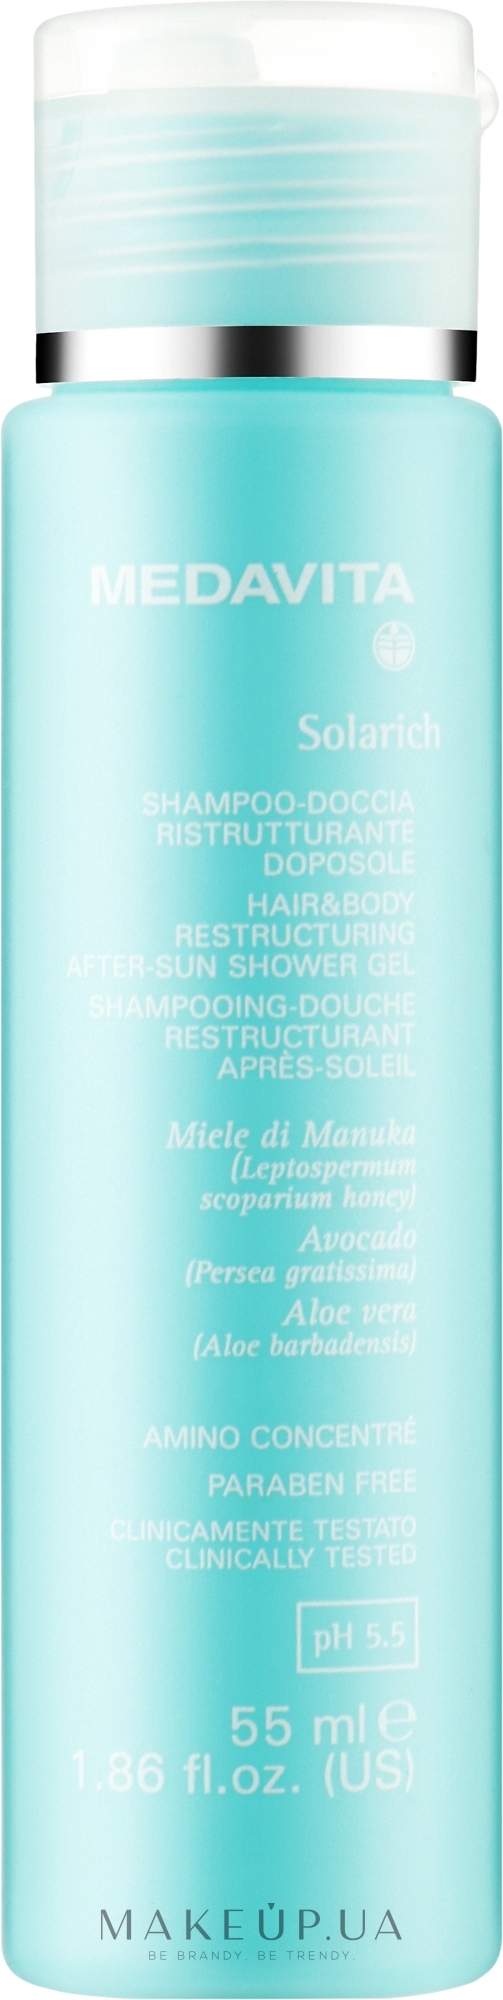 Відновлювальний шампунь і гель для душу - Medavita Solarich Hair&Body Restructuring After-Sun Shower Gel — фото 55ml